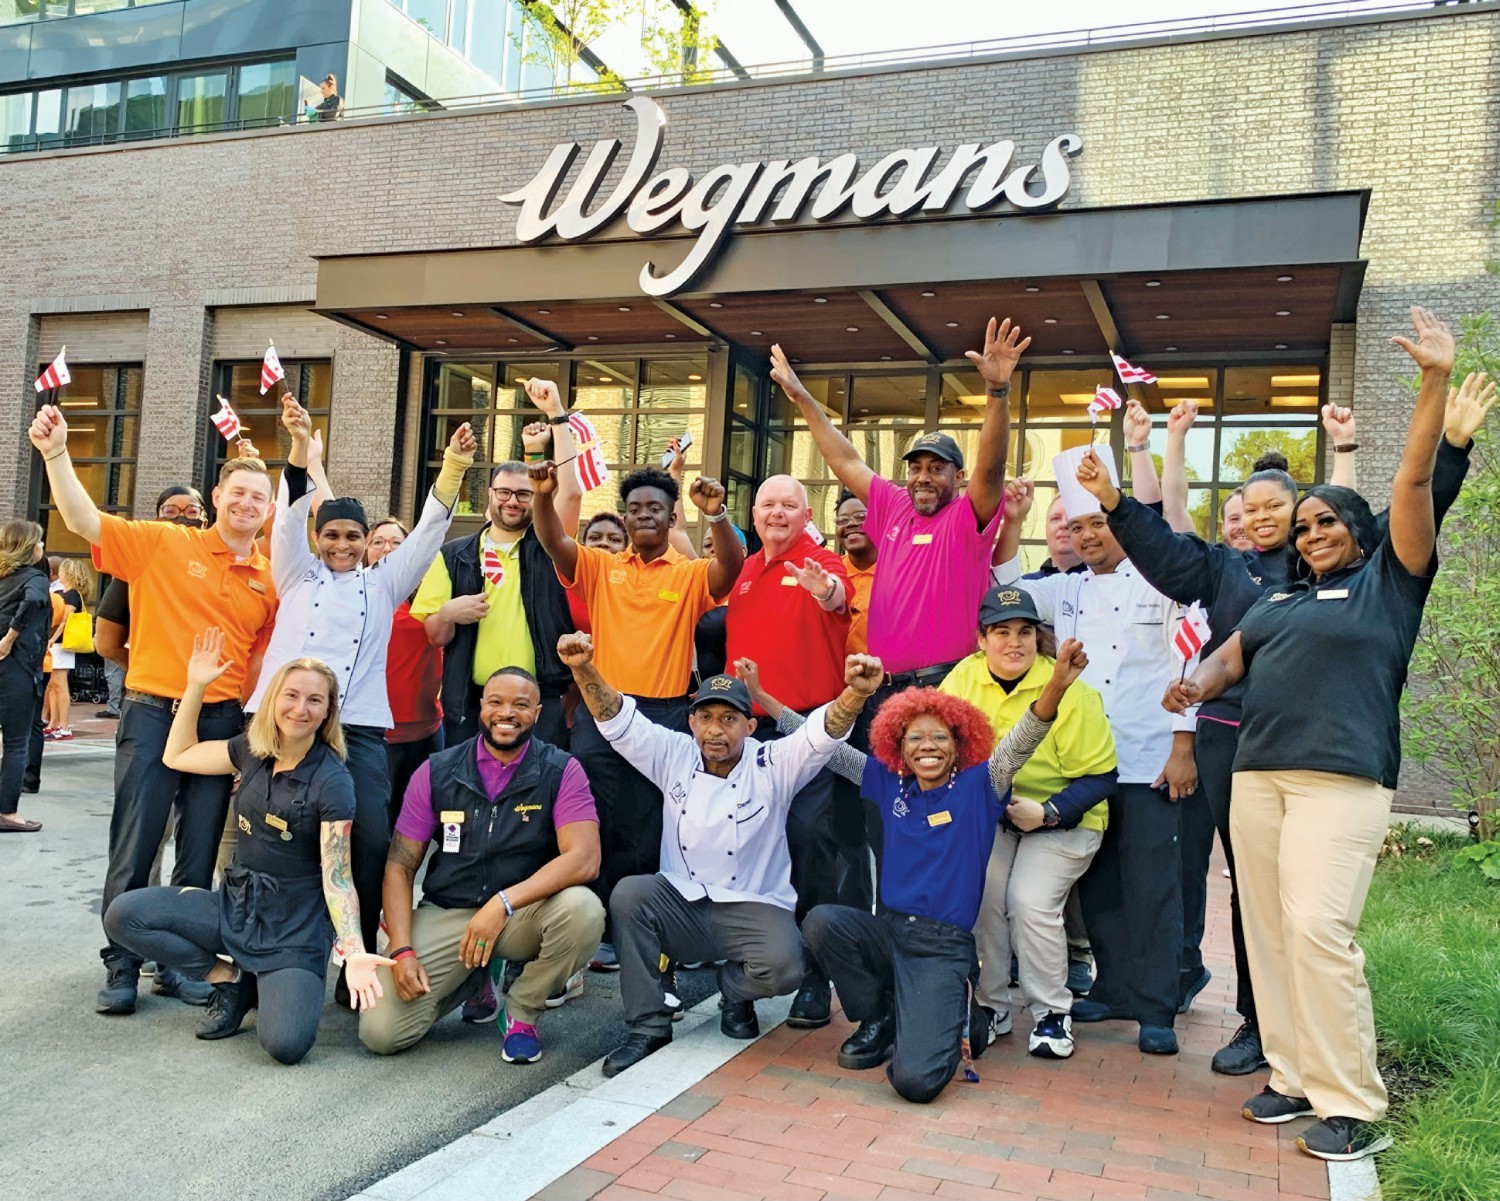  Employees at Wegmans supermarket take group photo.